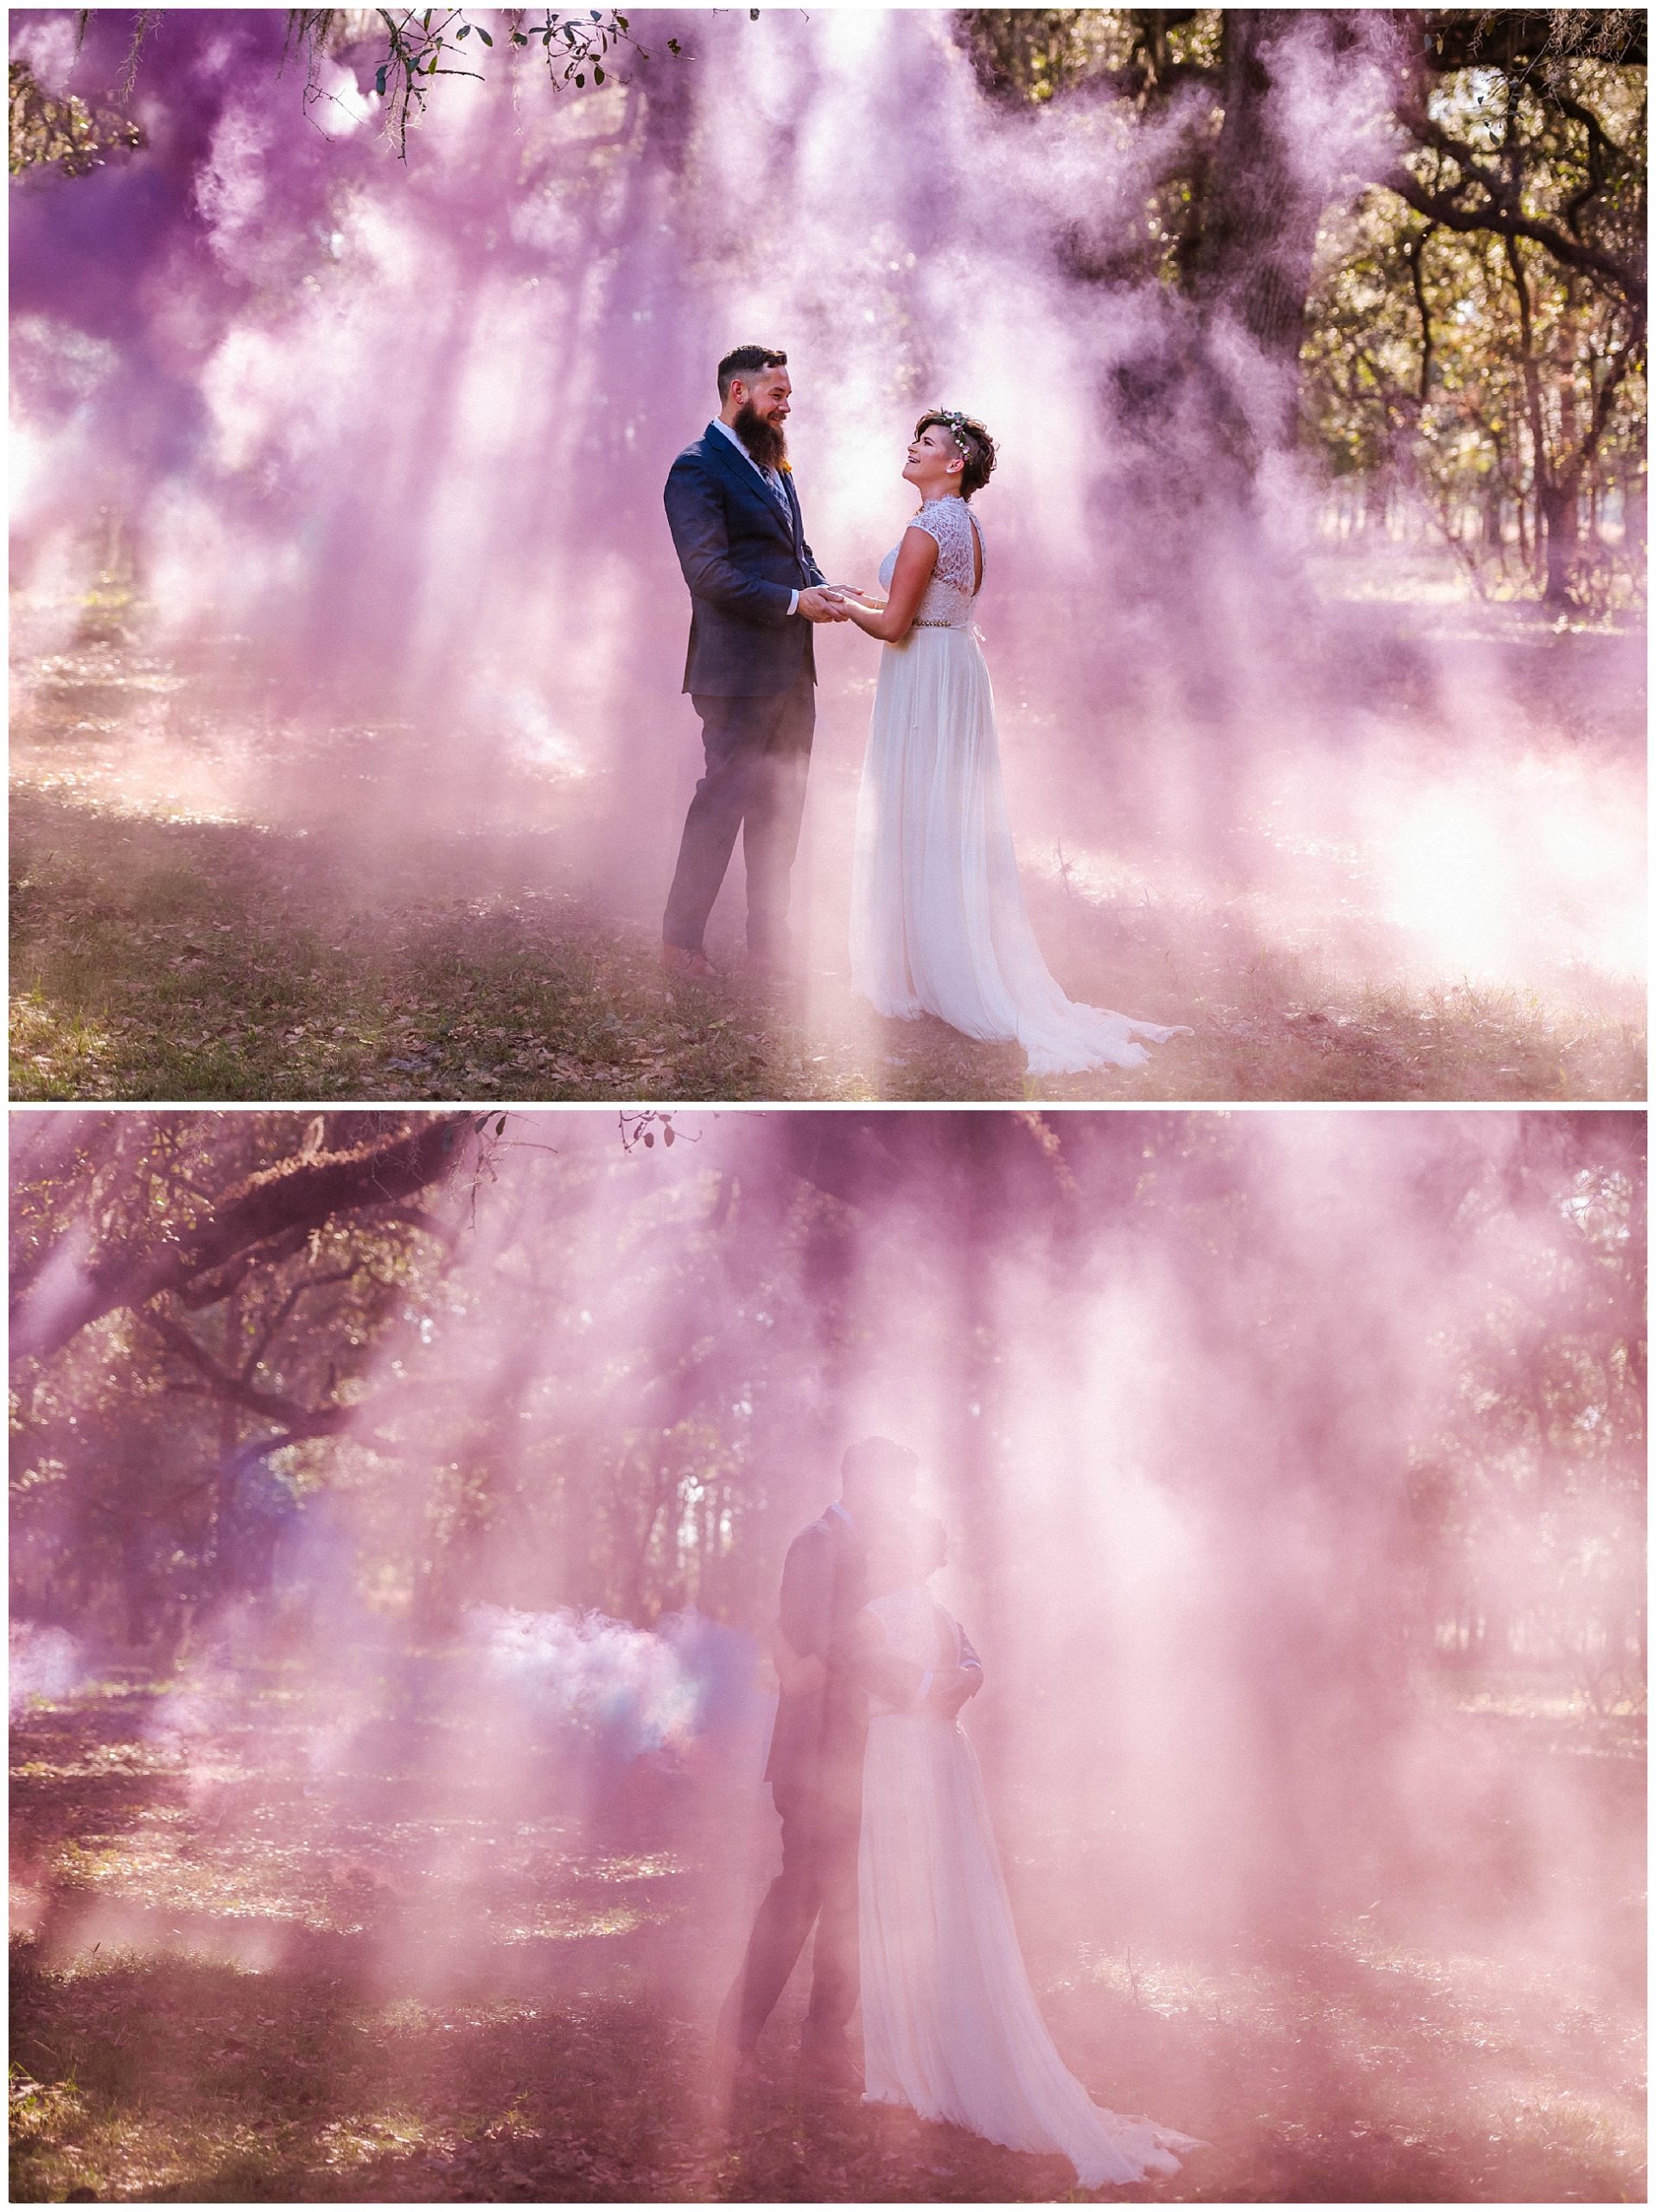 magical-outdoor-florida-wedding-smoke-bombs-flowers-crown-beard_0015.jpg